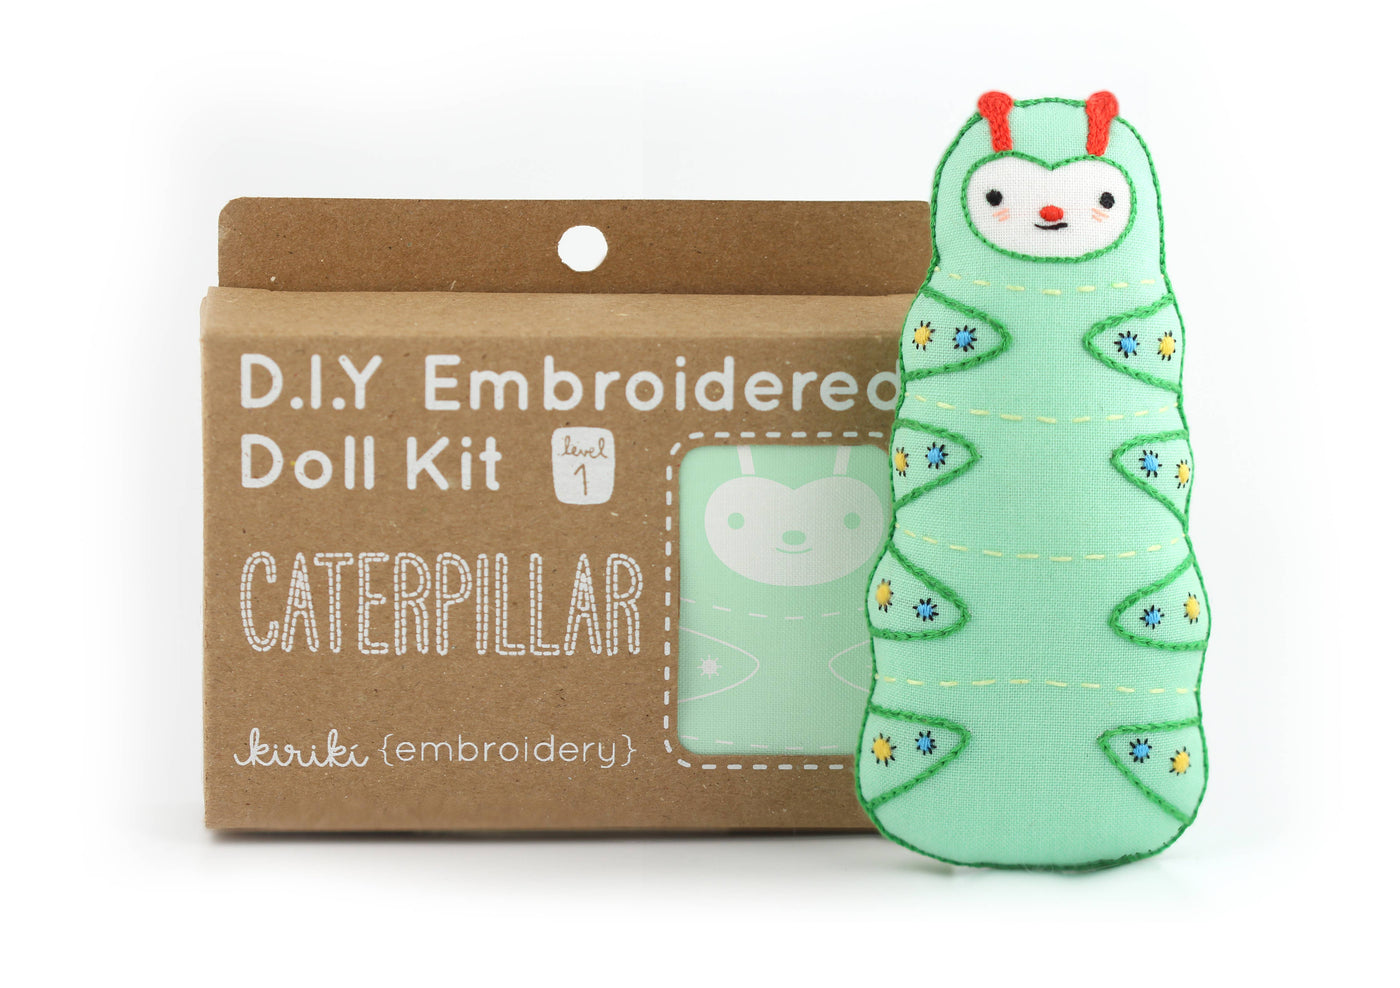 Caterpillar - Embroidery Kit